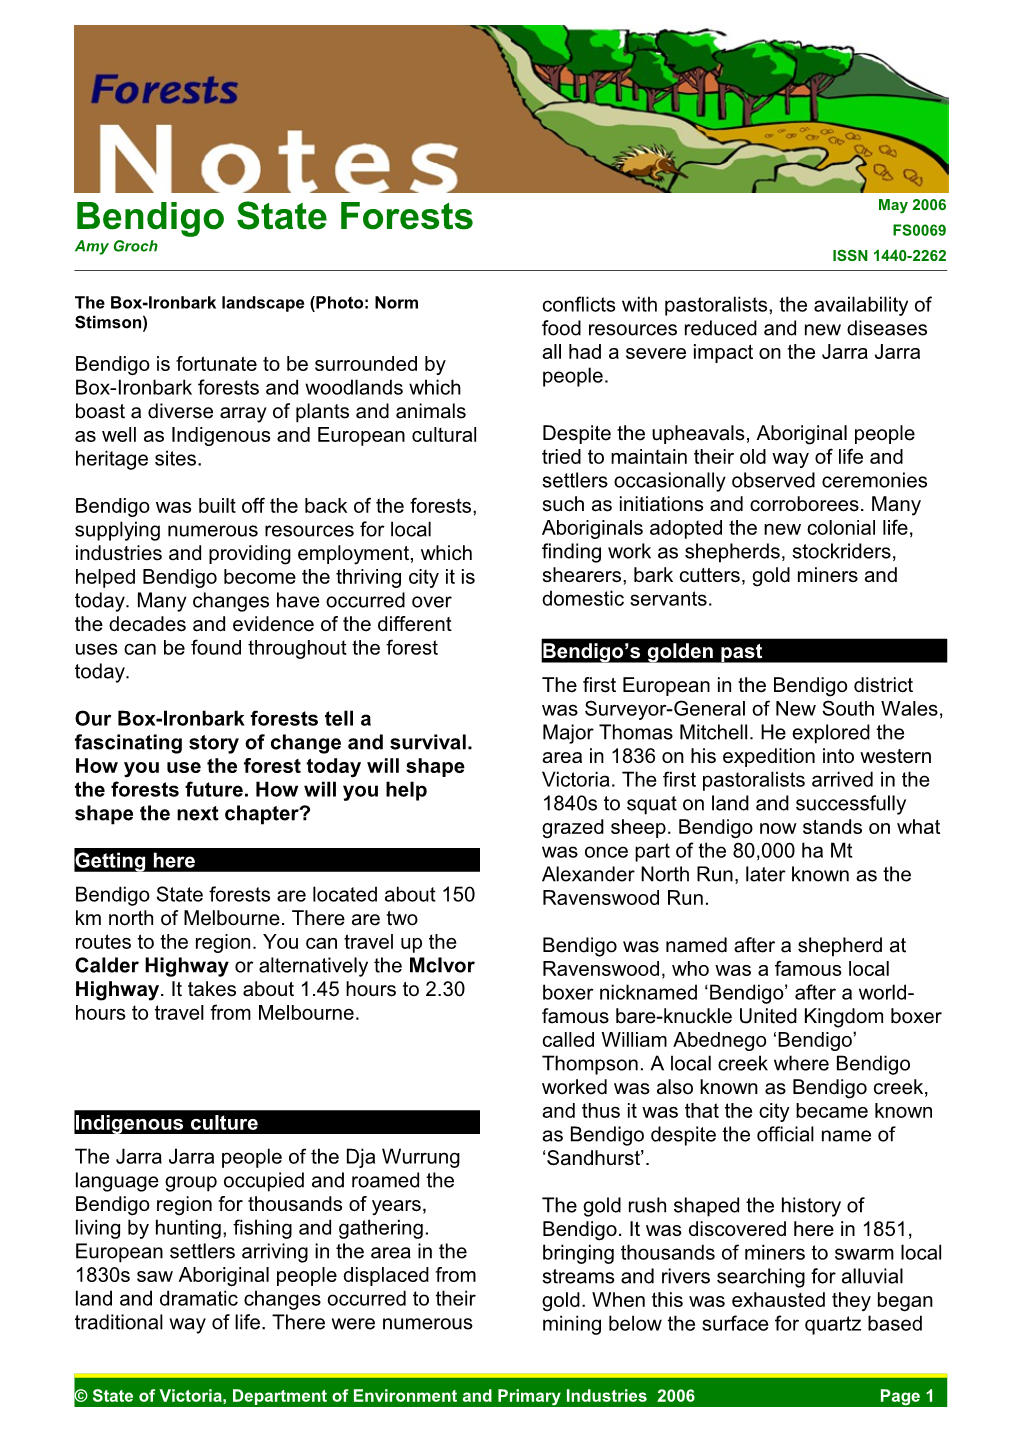 Bendigo State Forests